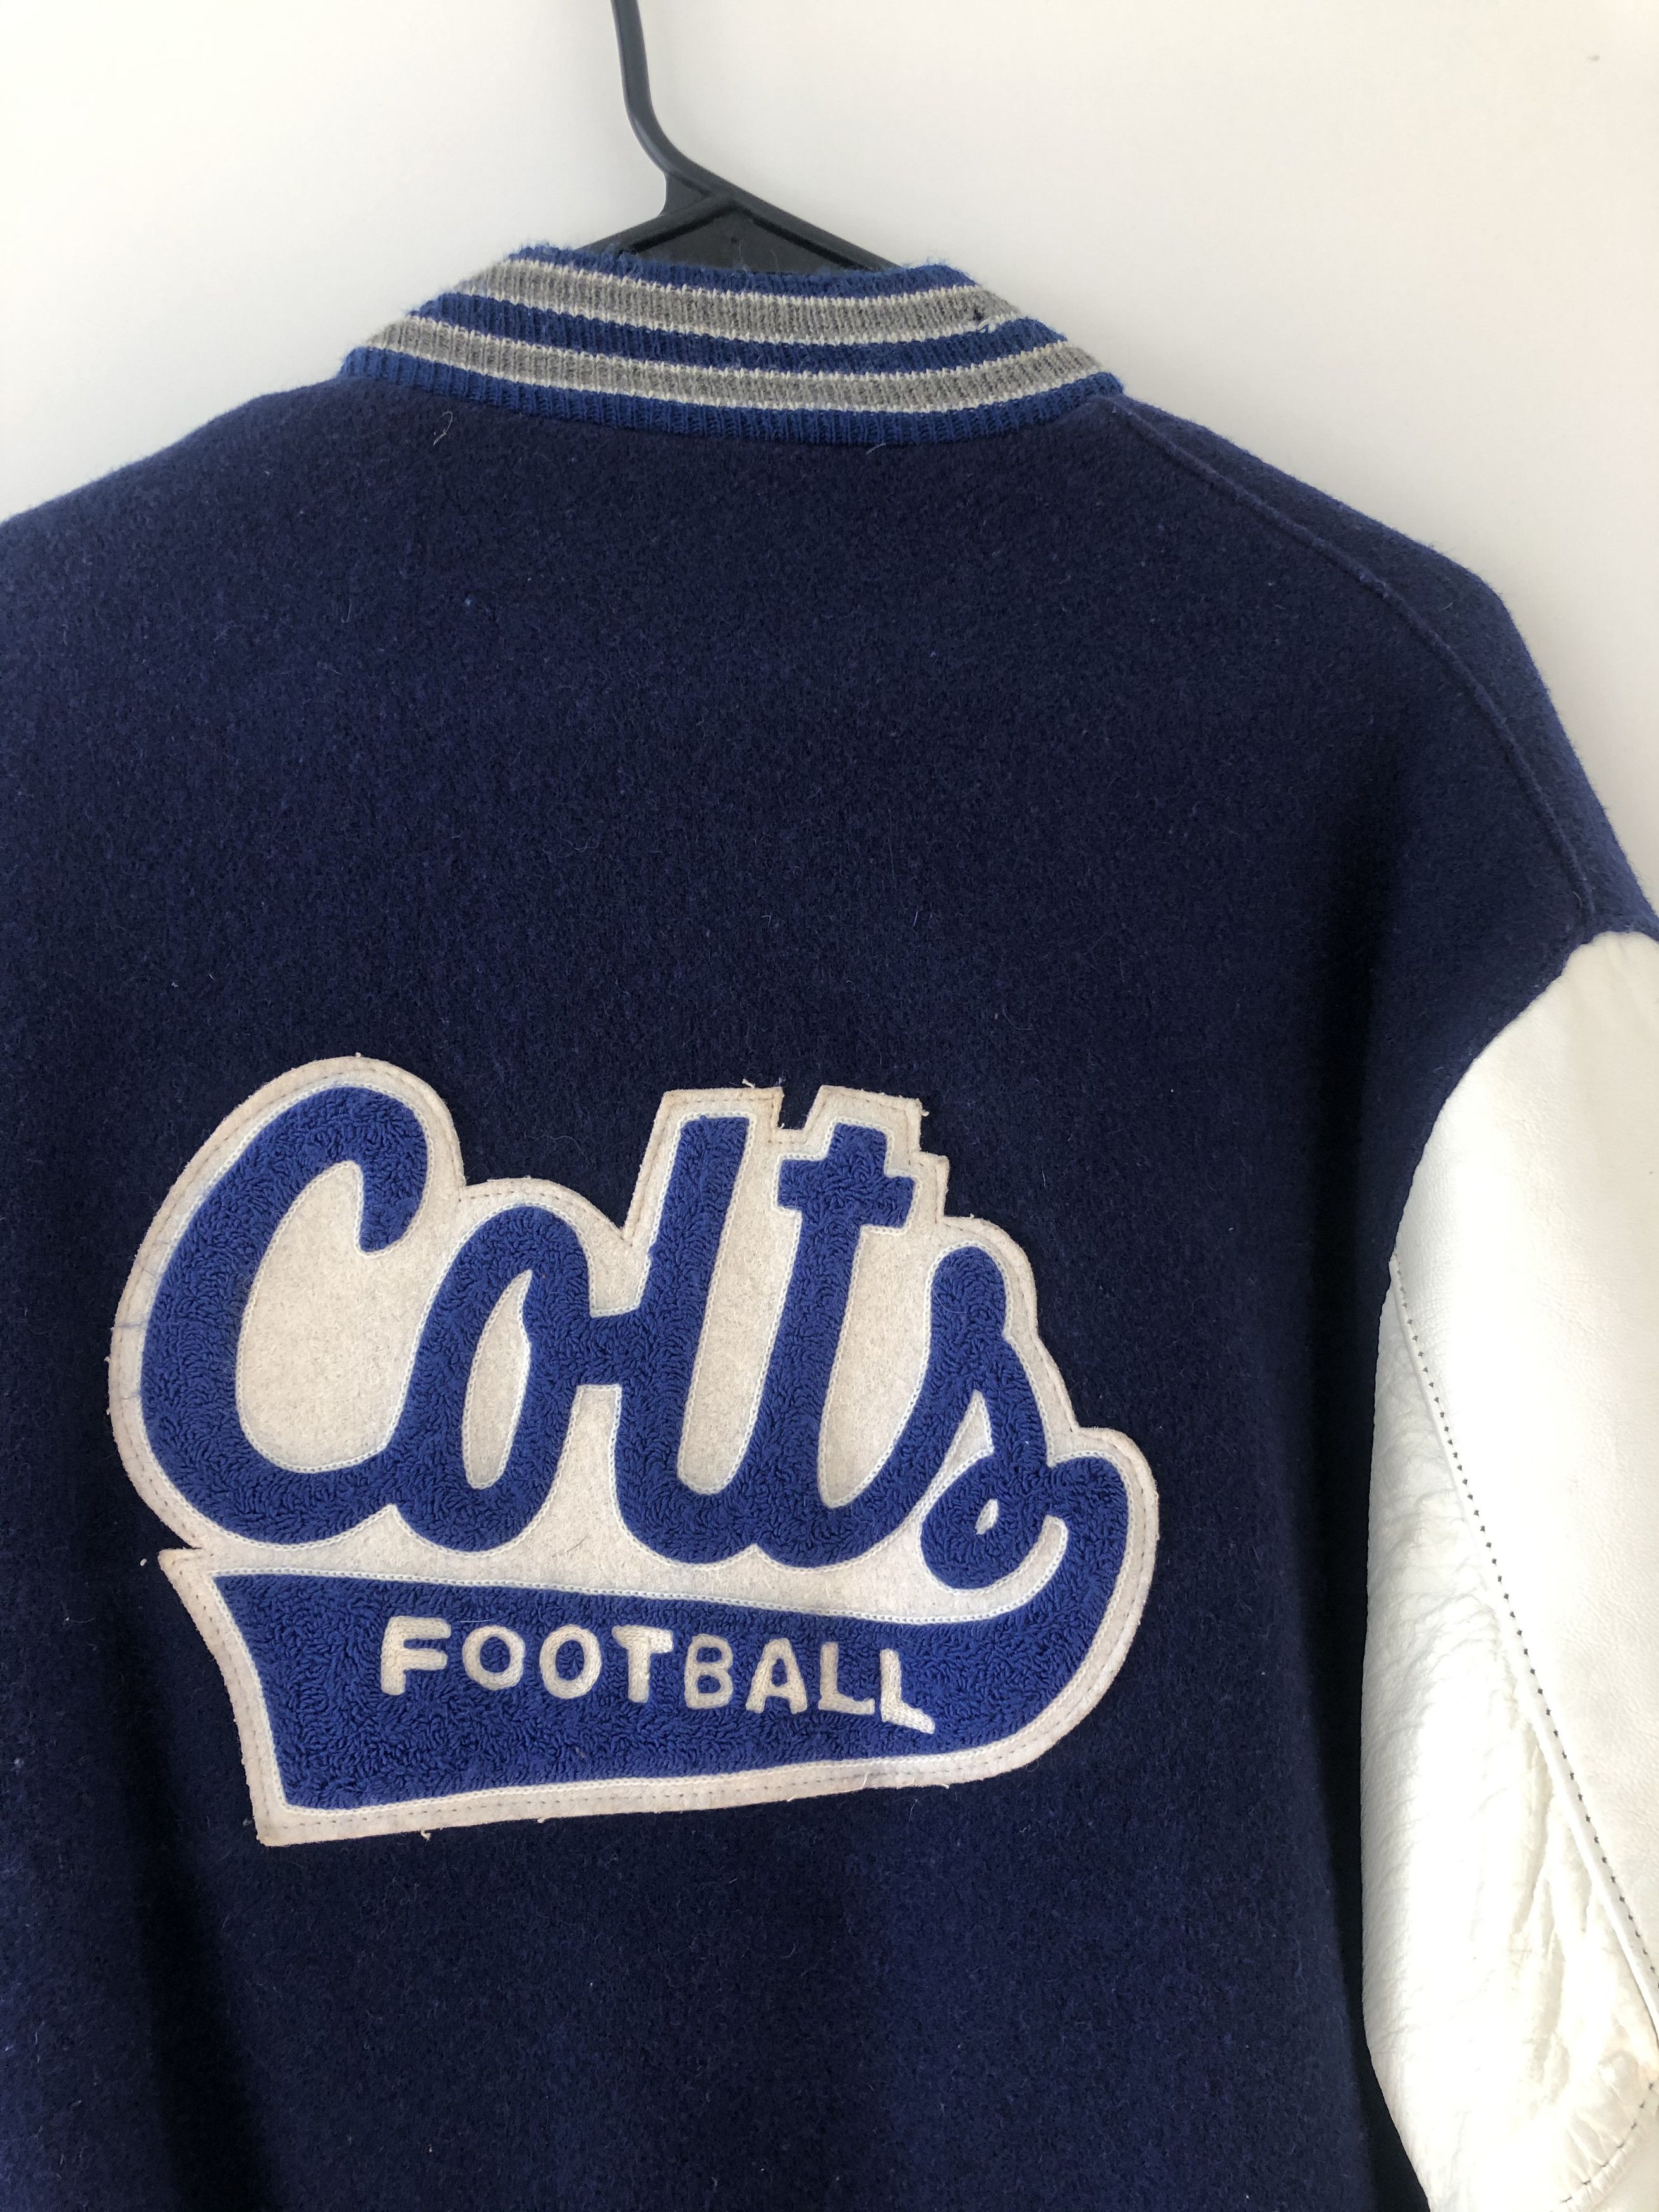 Vintage Indianapolis Colts Authentic 1971 Leather Jacket Size US S / EU 44-46 / 1 - 4 Thumbnail